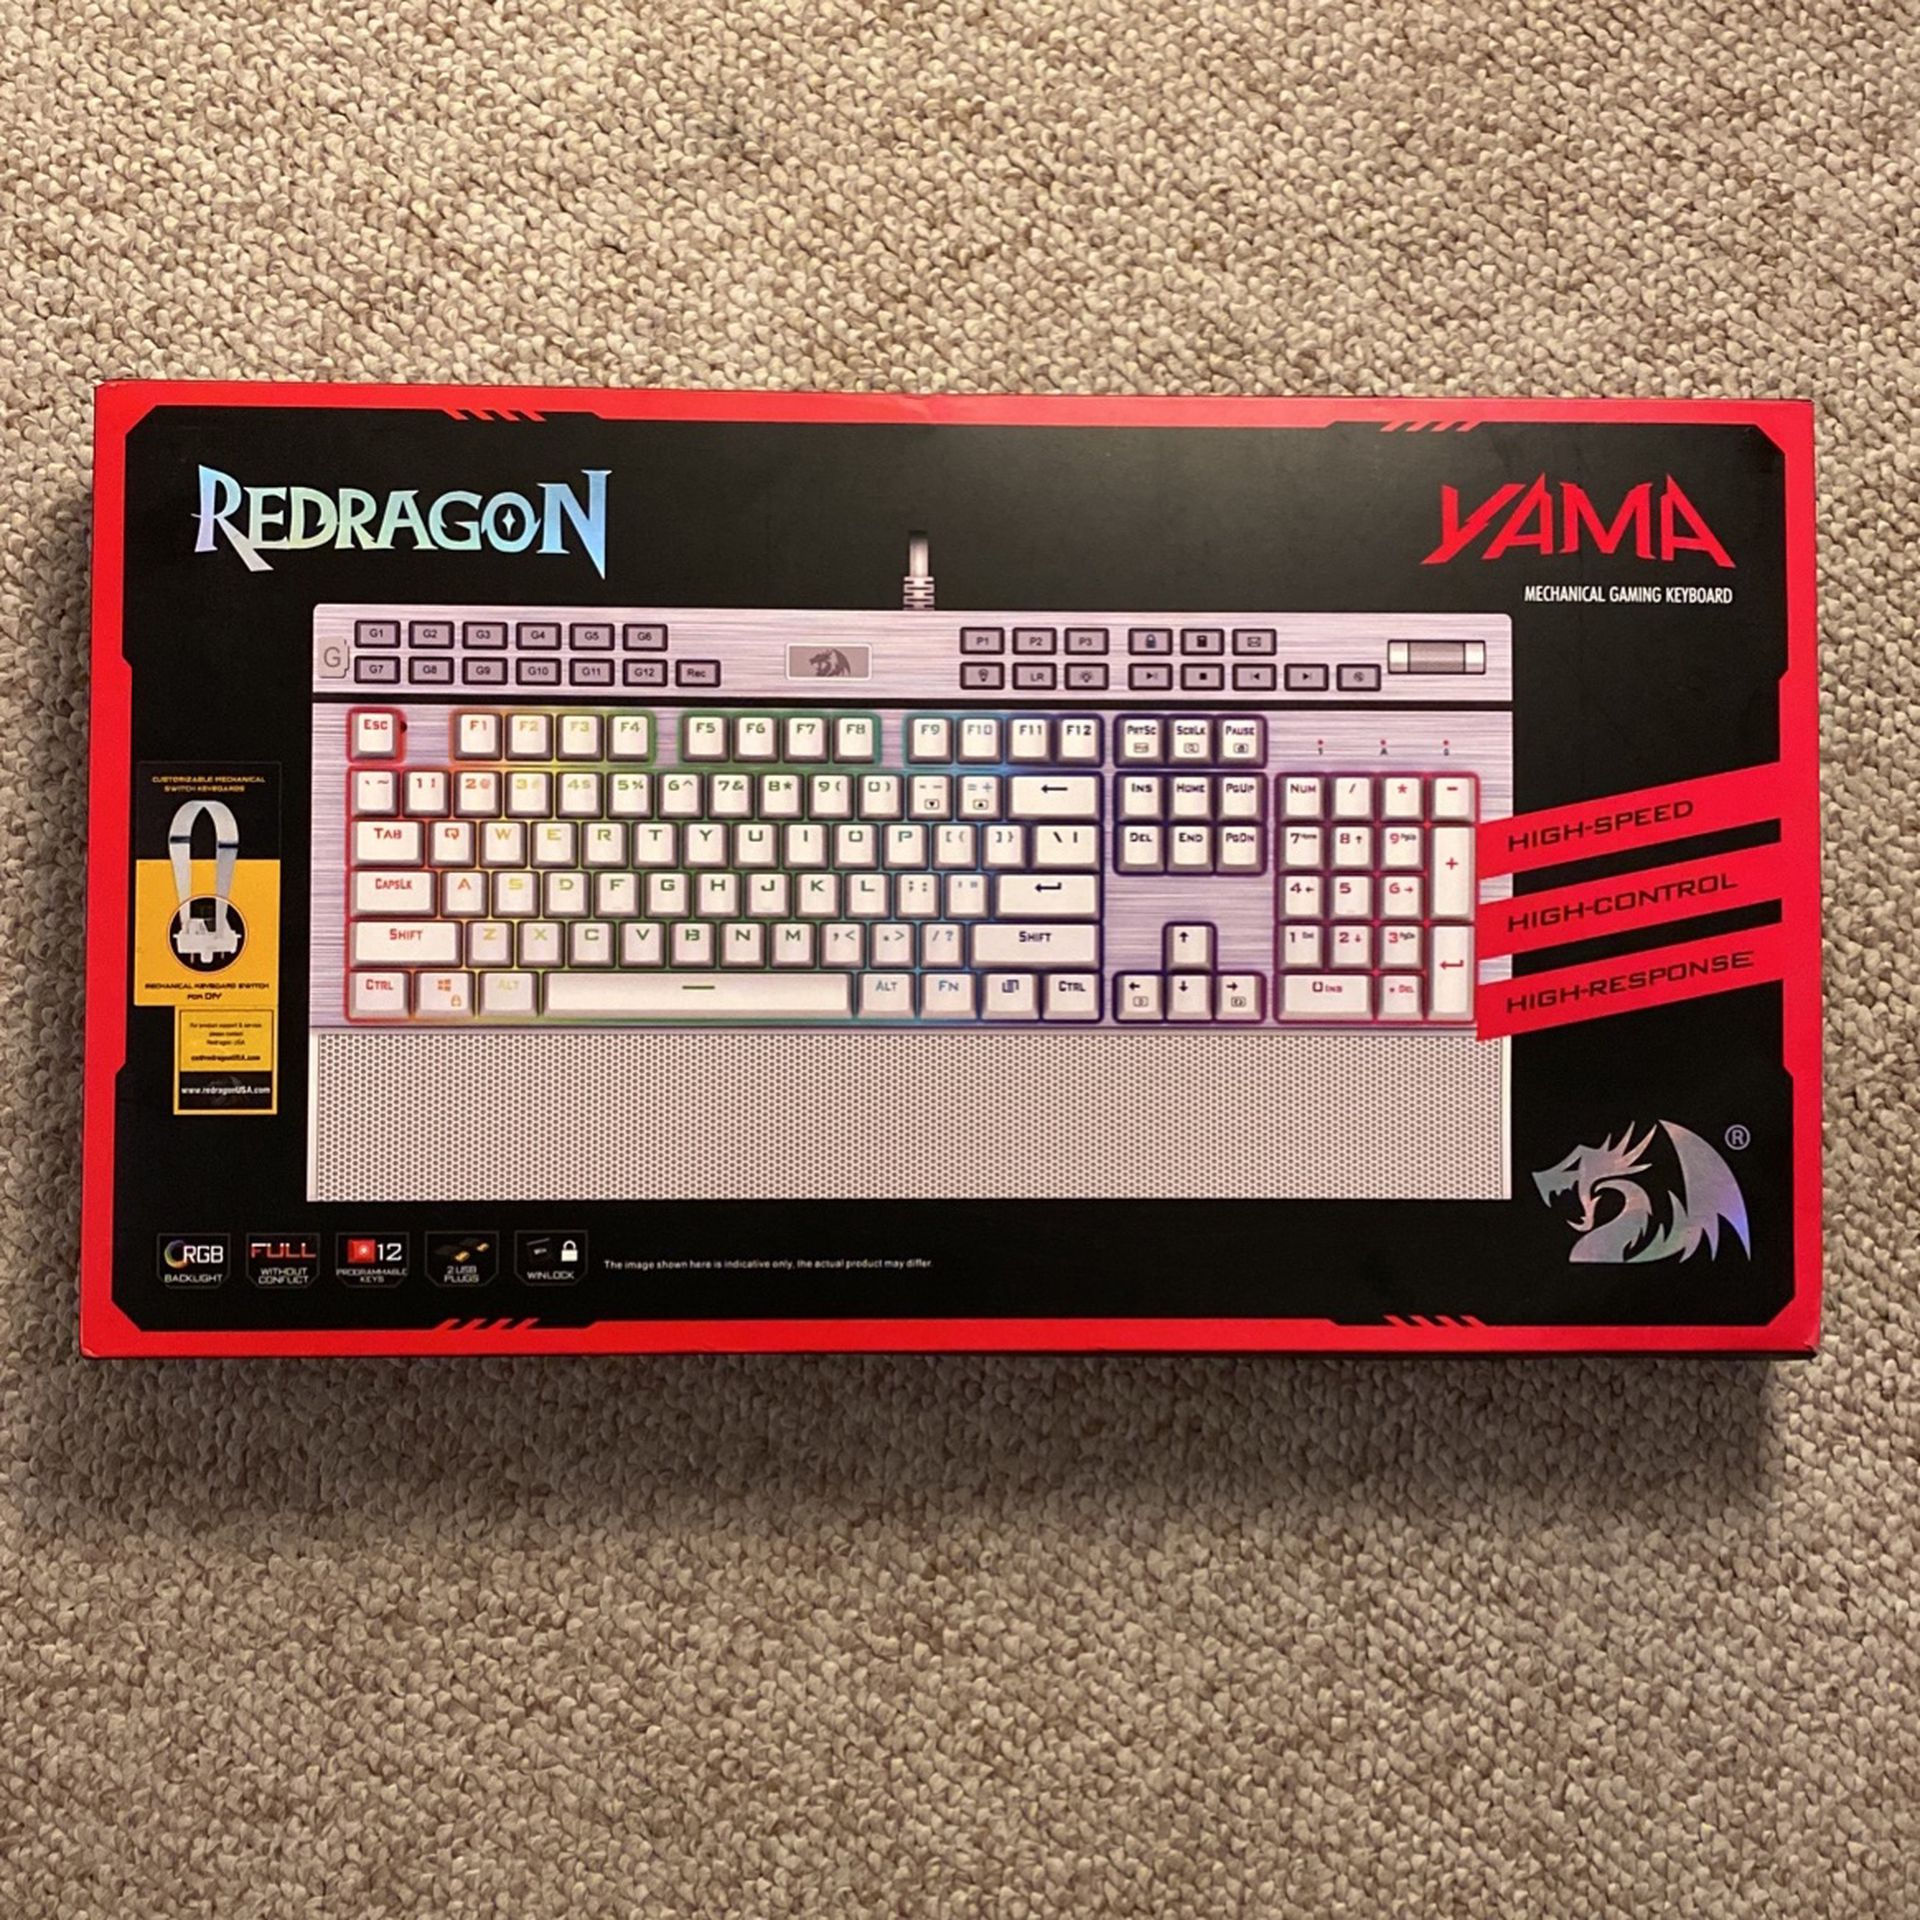 Redragon Yama Gaming Keyboard. Model: K550W-RGB-1